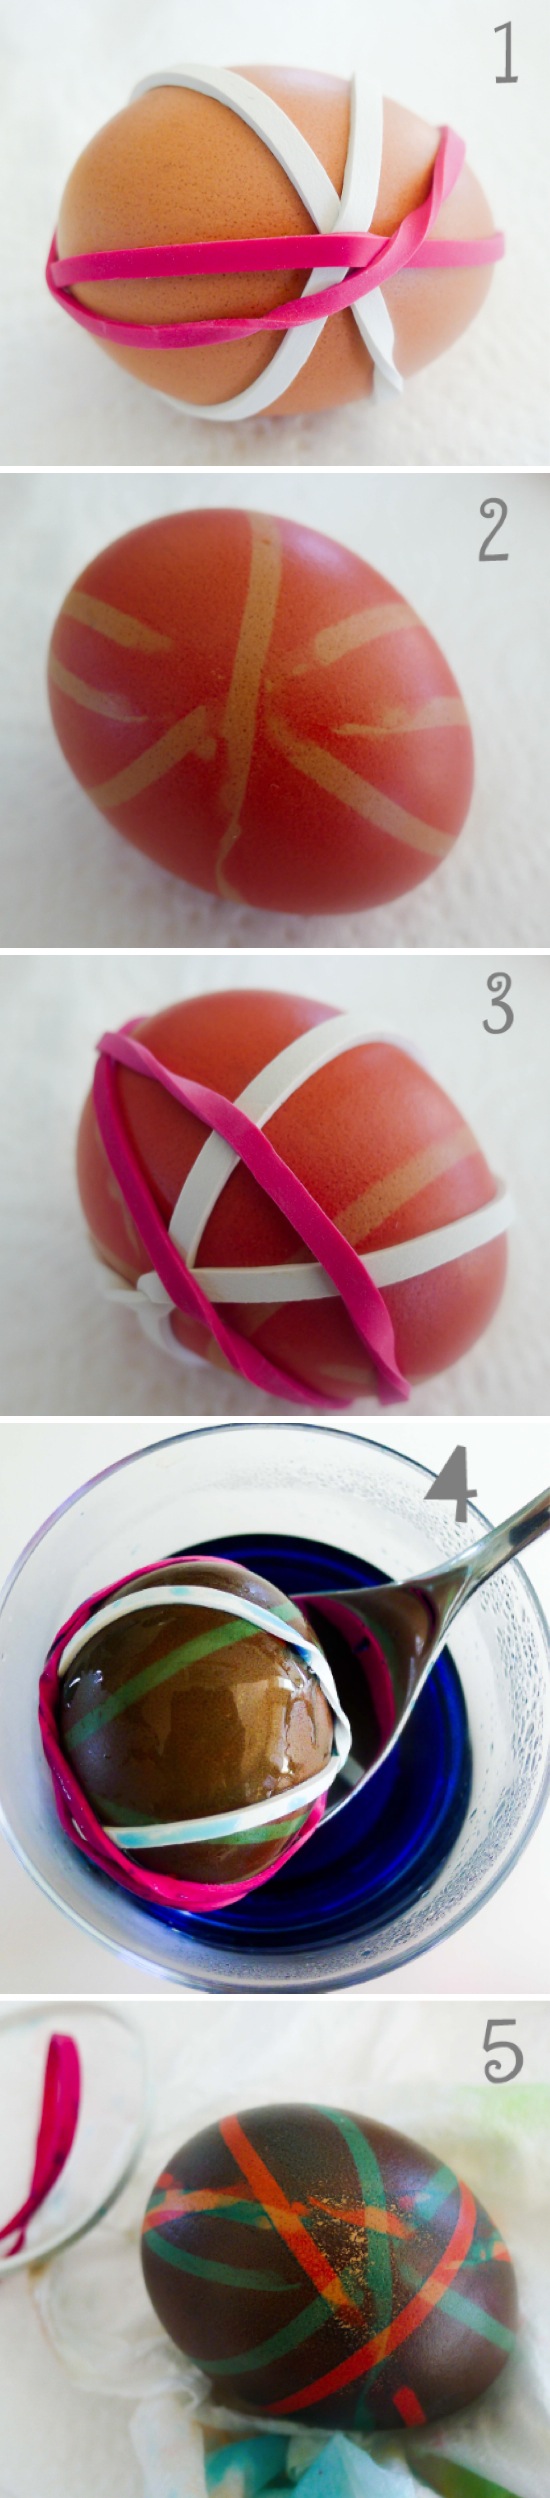 Rubber Band Easter Egg Trick | Easter Crafts